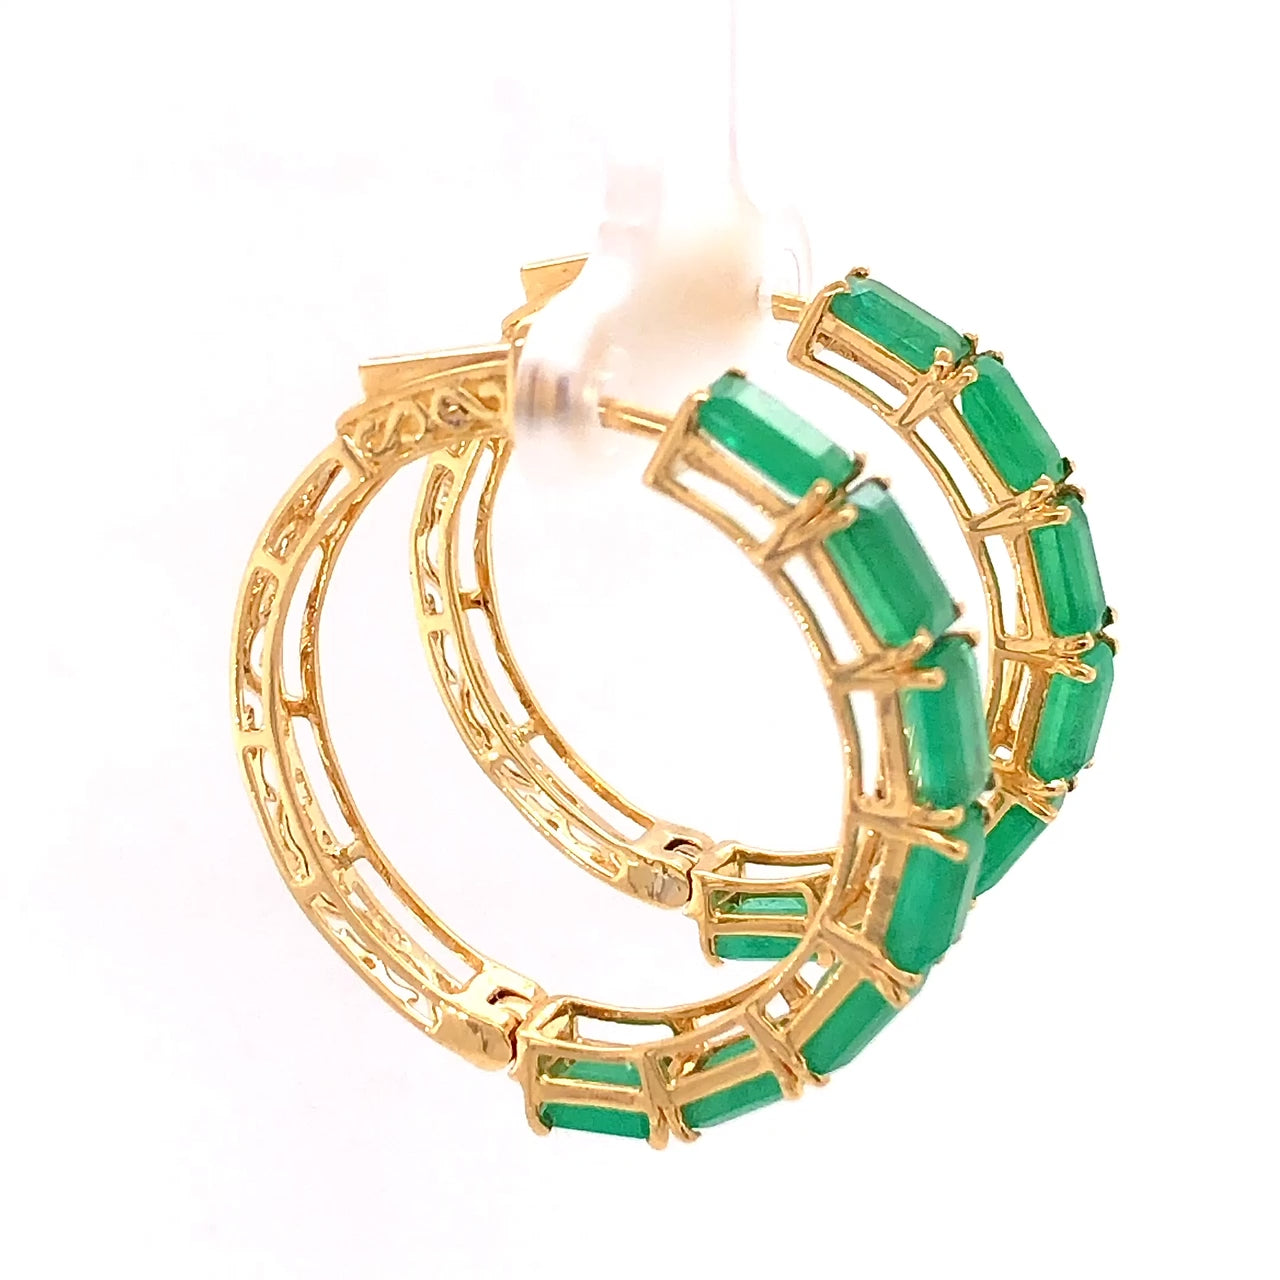 Designer classic emerald earrings